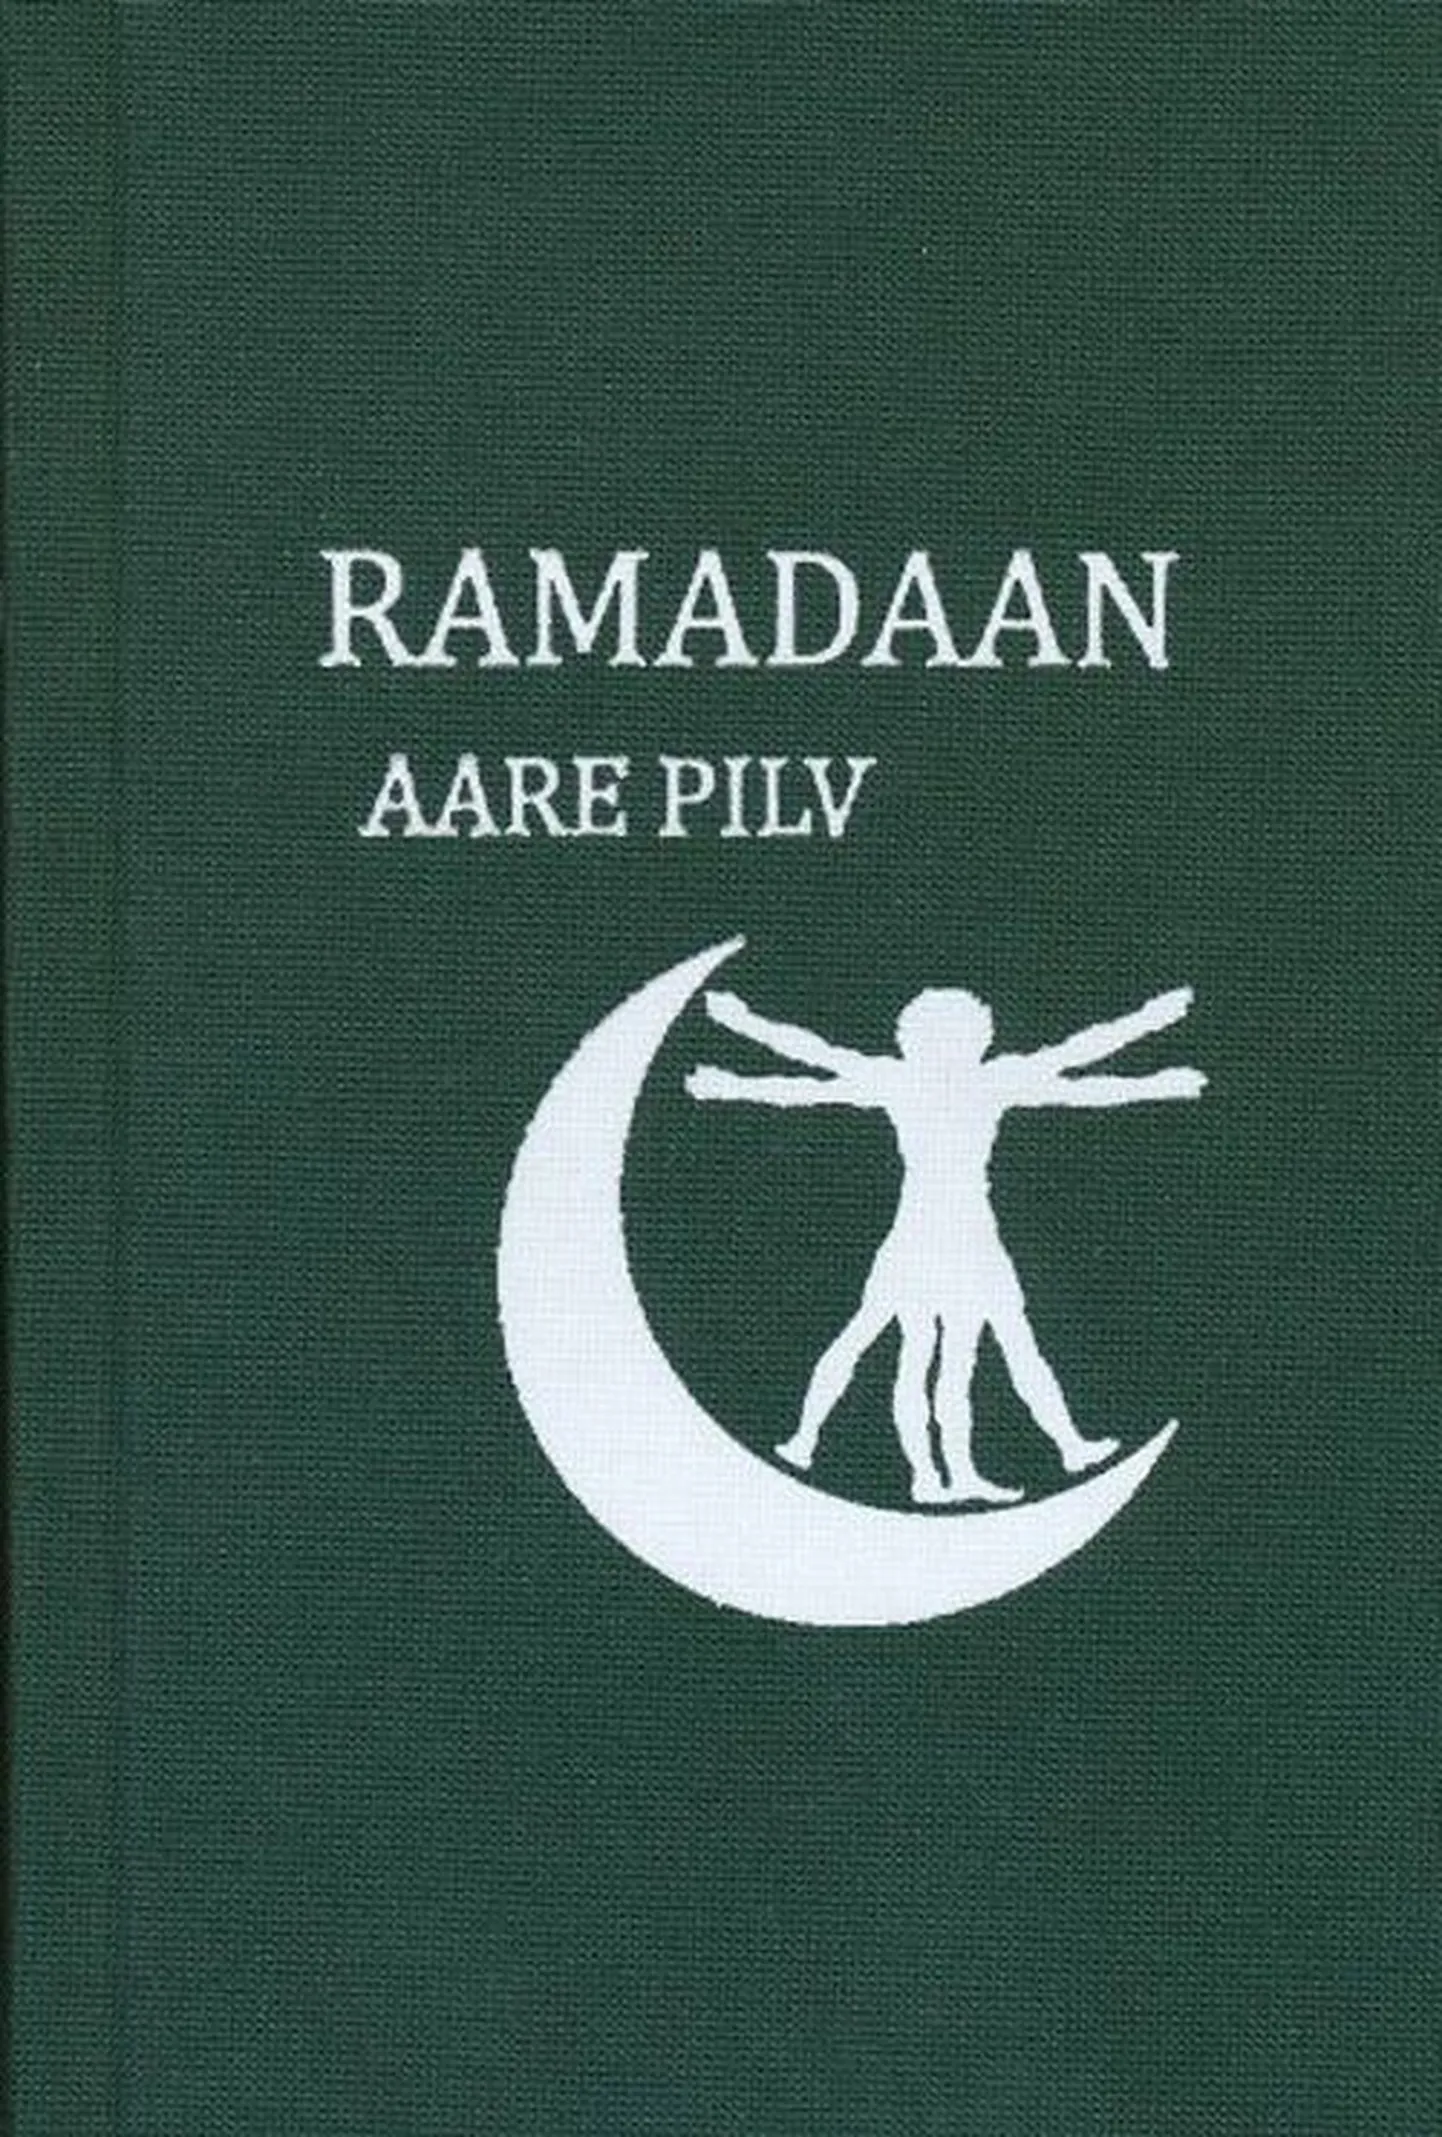 Raamat
Aare Pilv 
«Ramadaan»
Tuum 2010